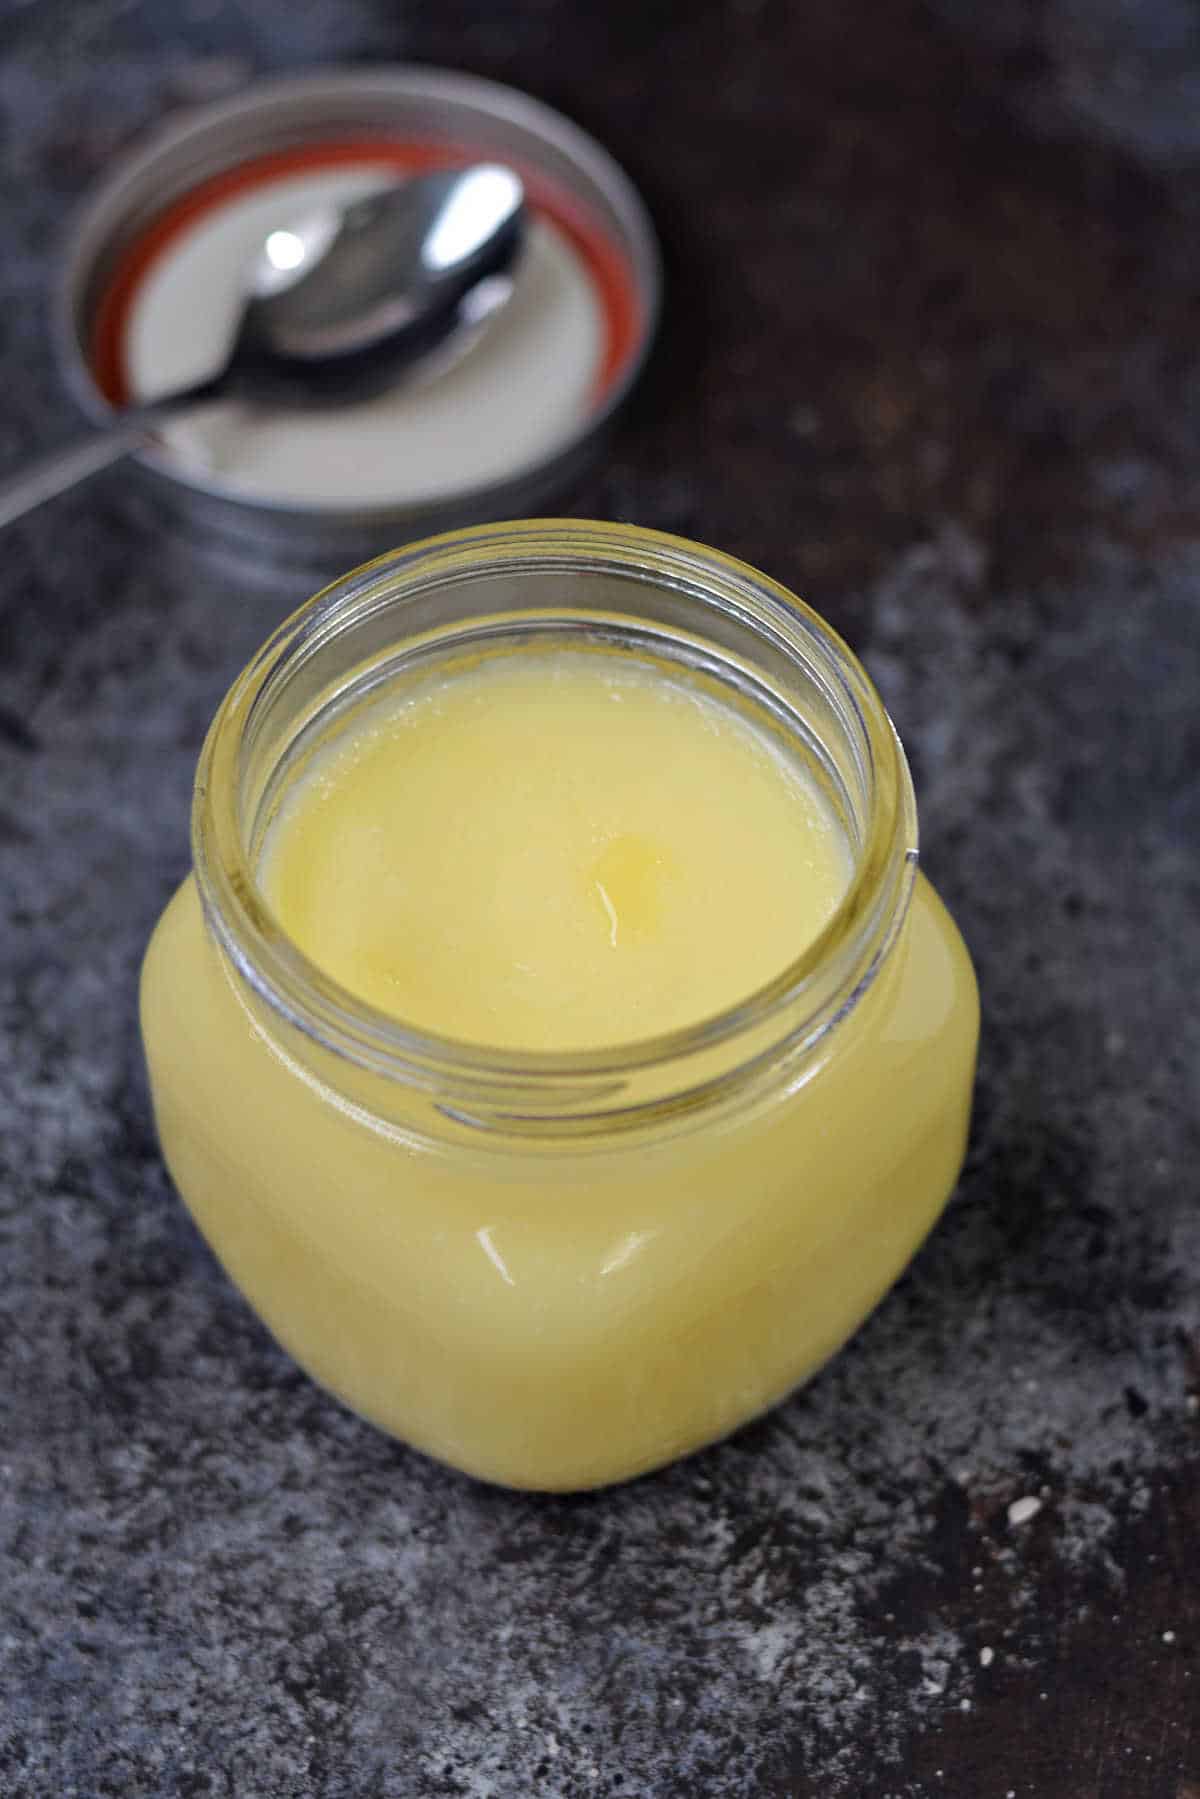 Clarified butter in a small mason jar.